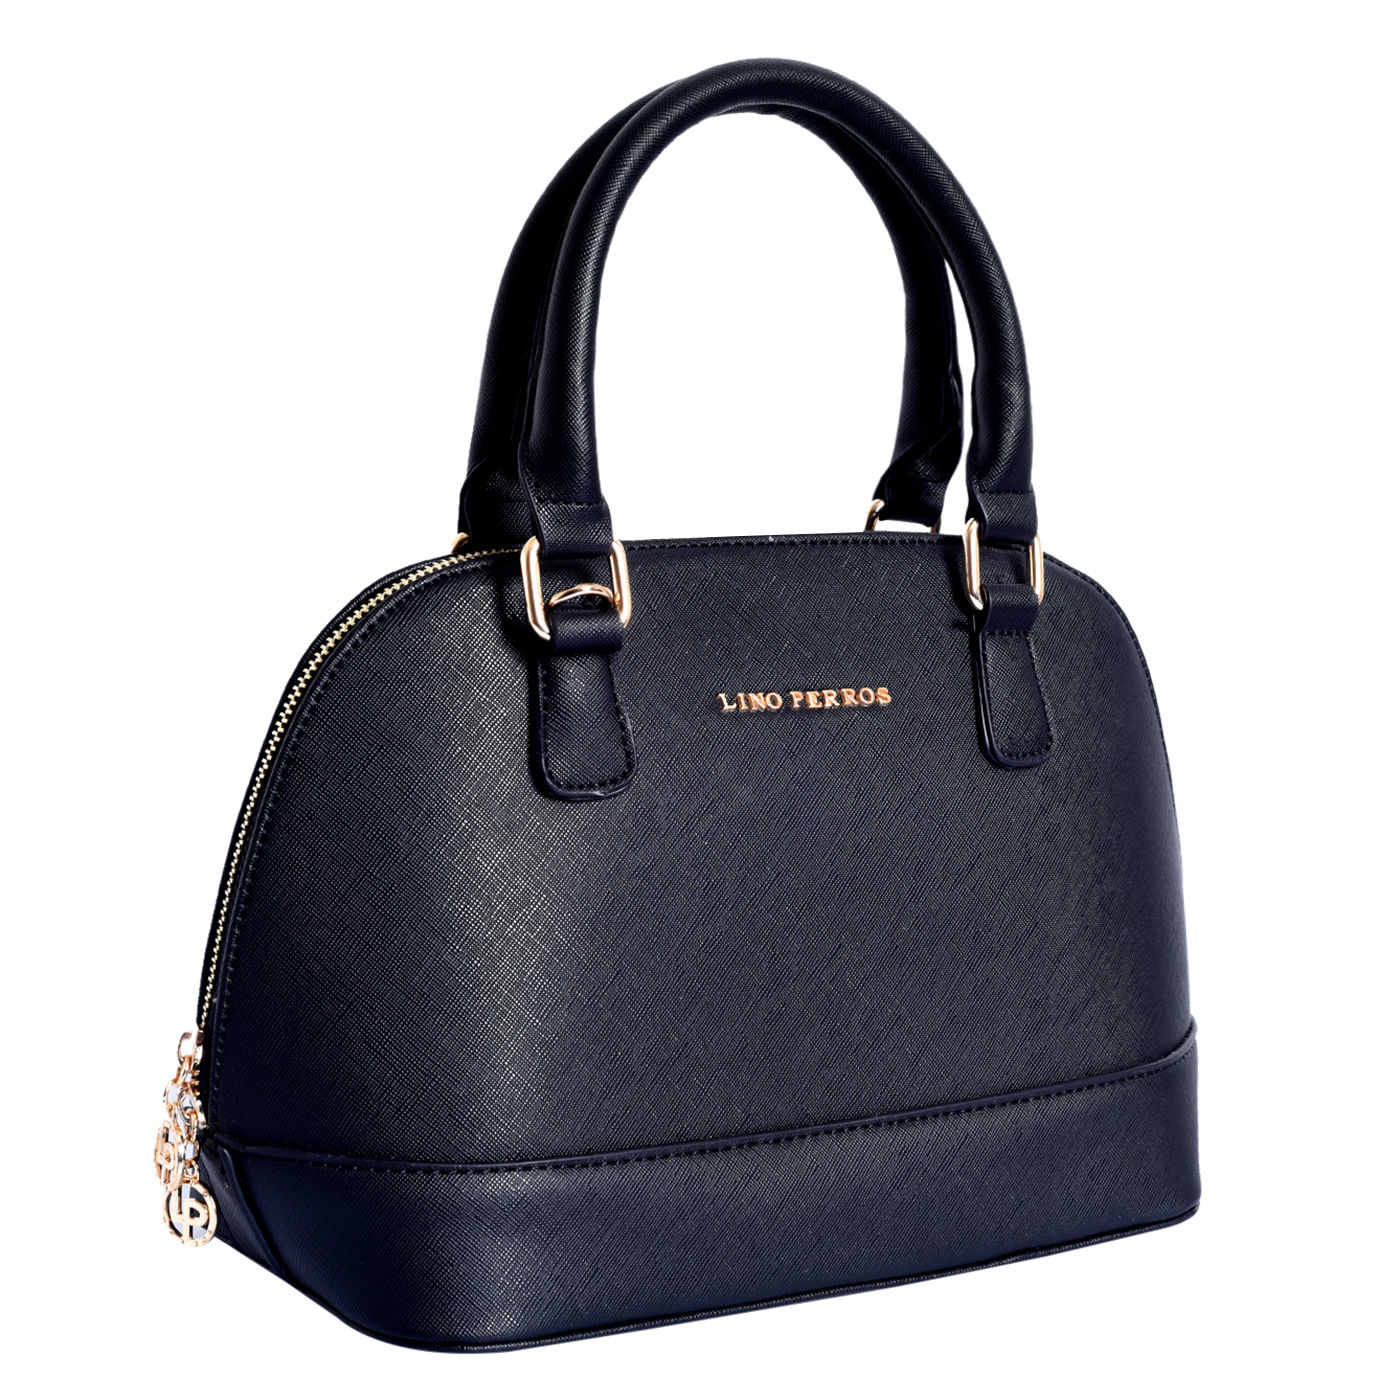 Lino Perros Bags & Handbags Online India : Buy Lino Perros Bags